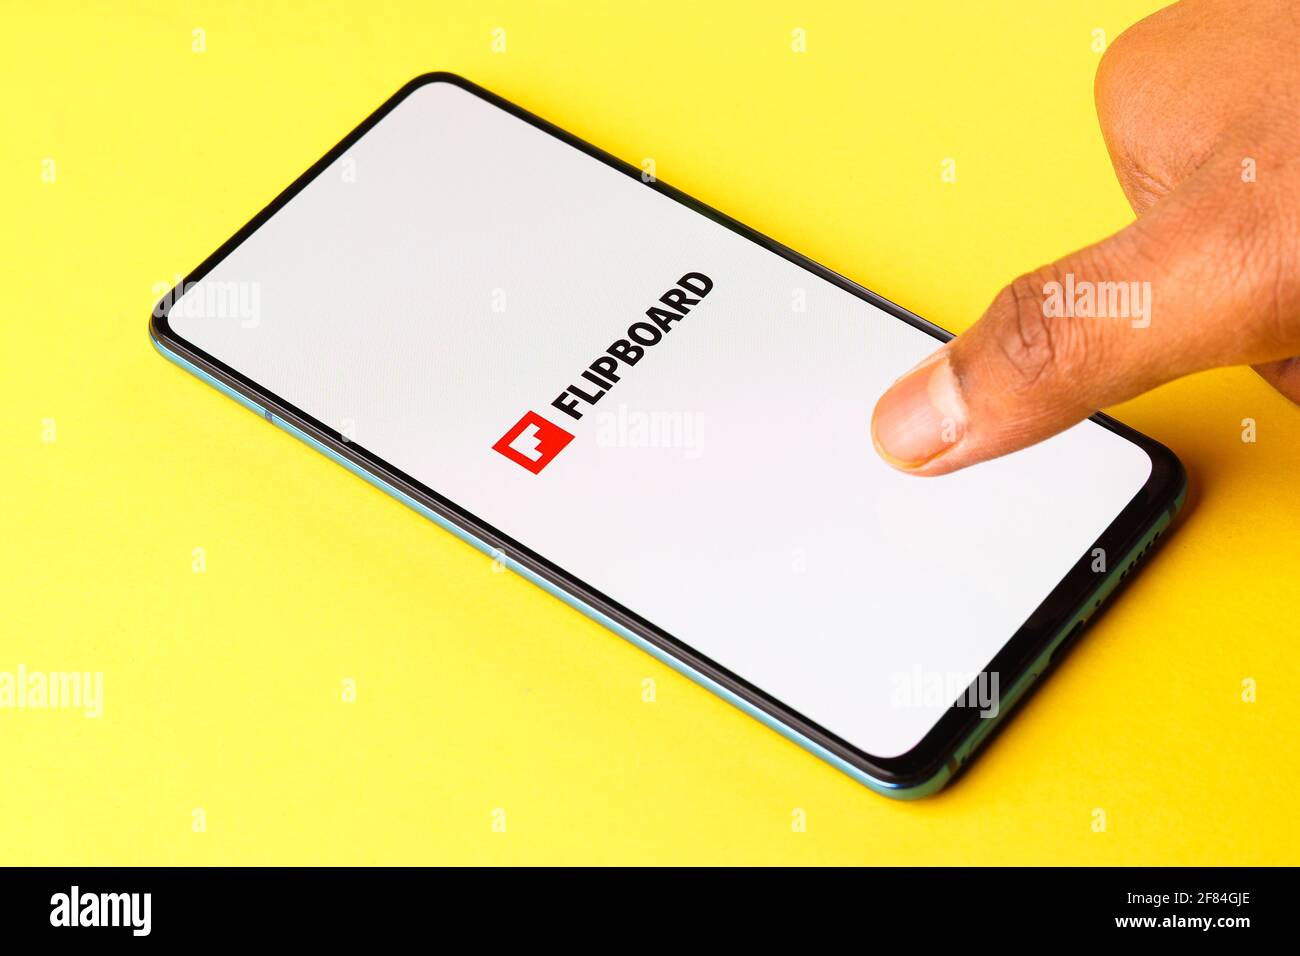 Assam, india - April 10, 2021 : Flipboard logo on phone screen stock image. Stock Photo